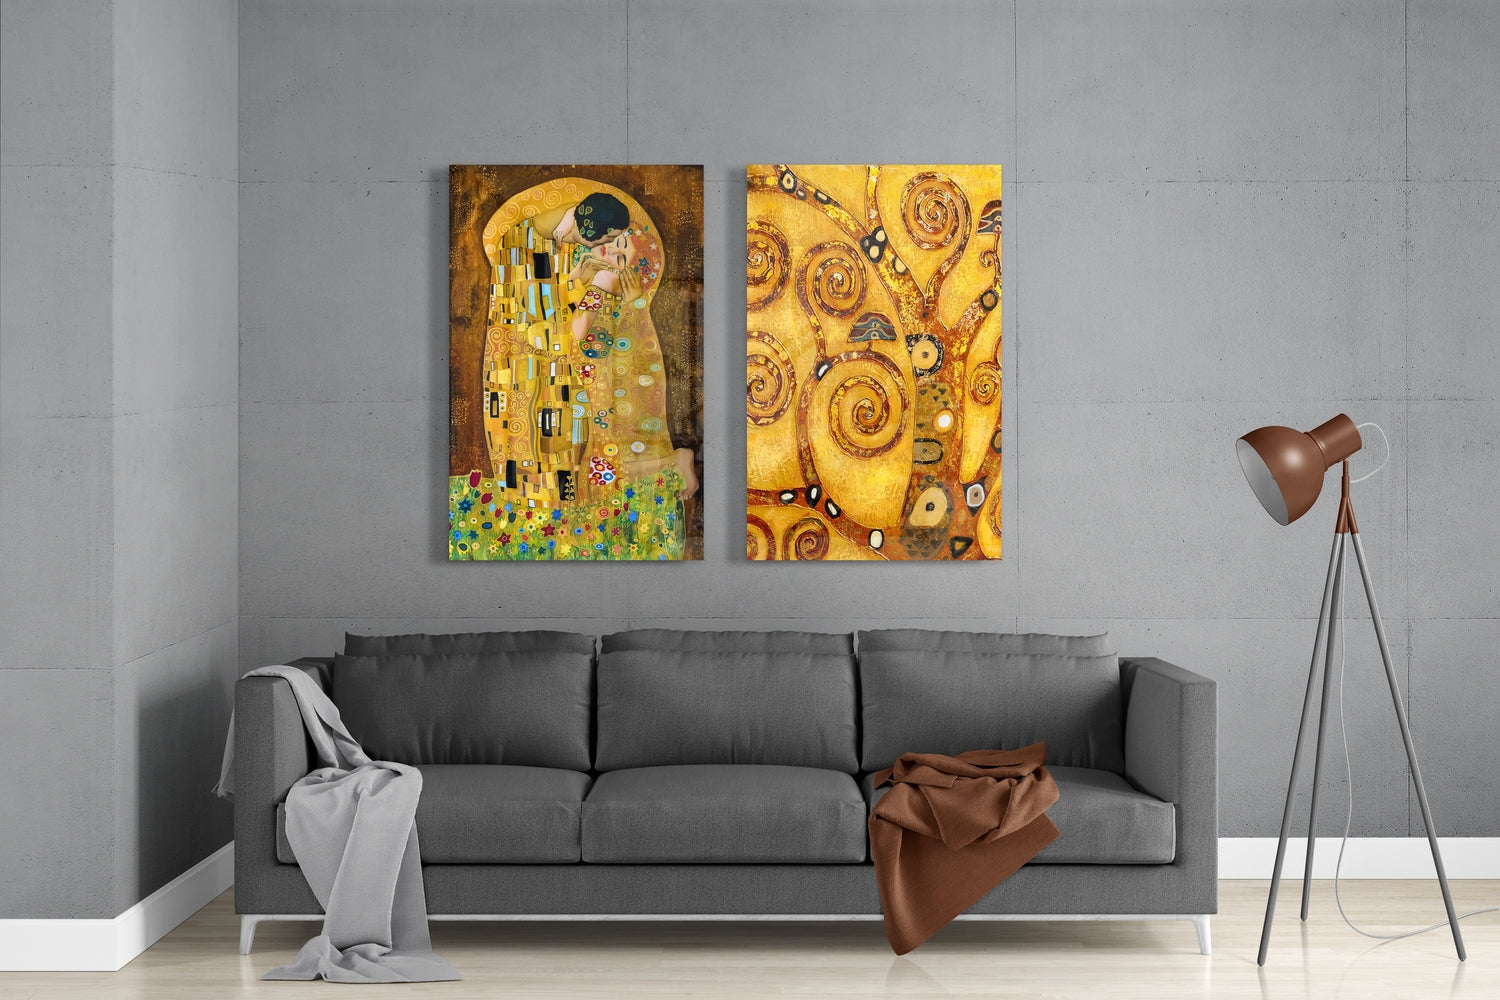 Klimt 2 Pieces Combine Glass Wall Art